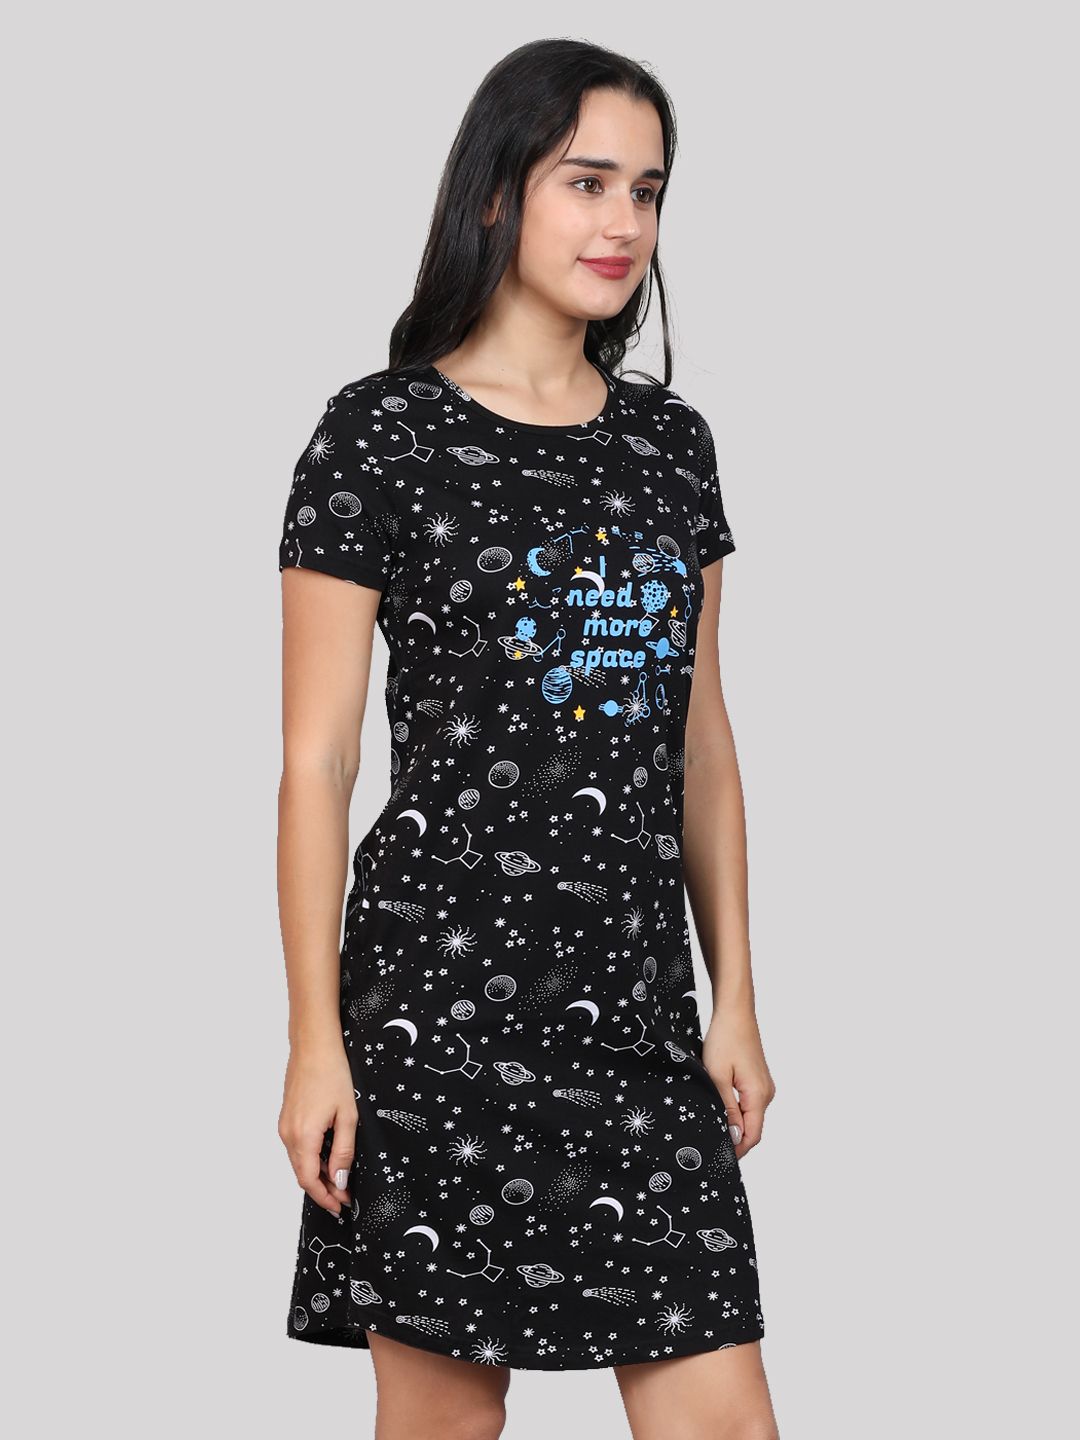 Evolove Women's 100% Cotton Printed Knee Length Casual Regular Short Nightgown (Black)